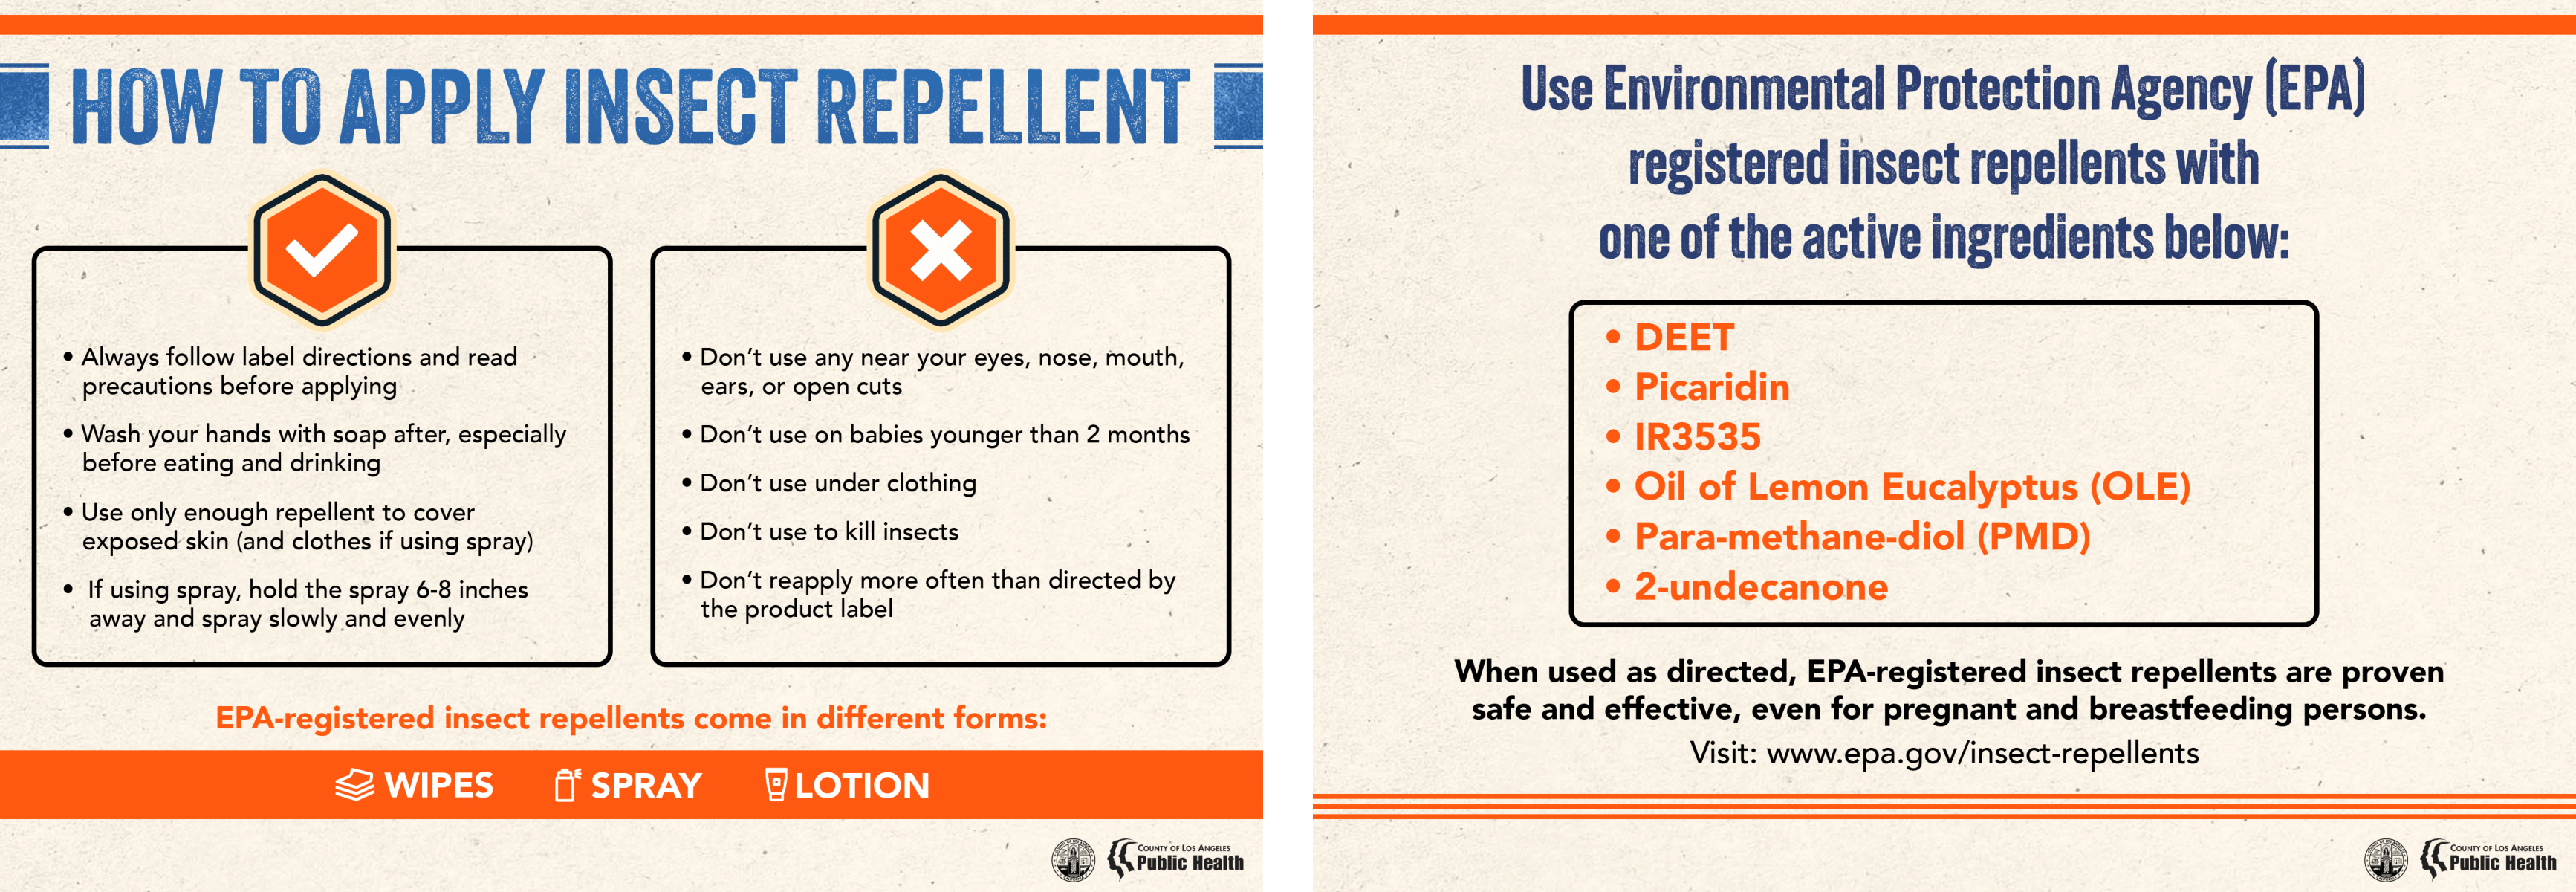 RepellentApplication-Instructions